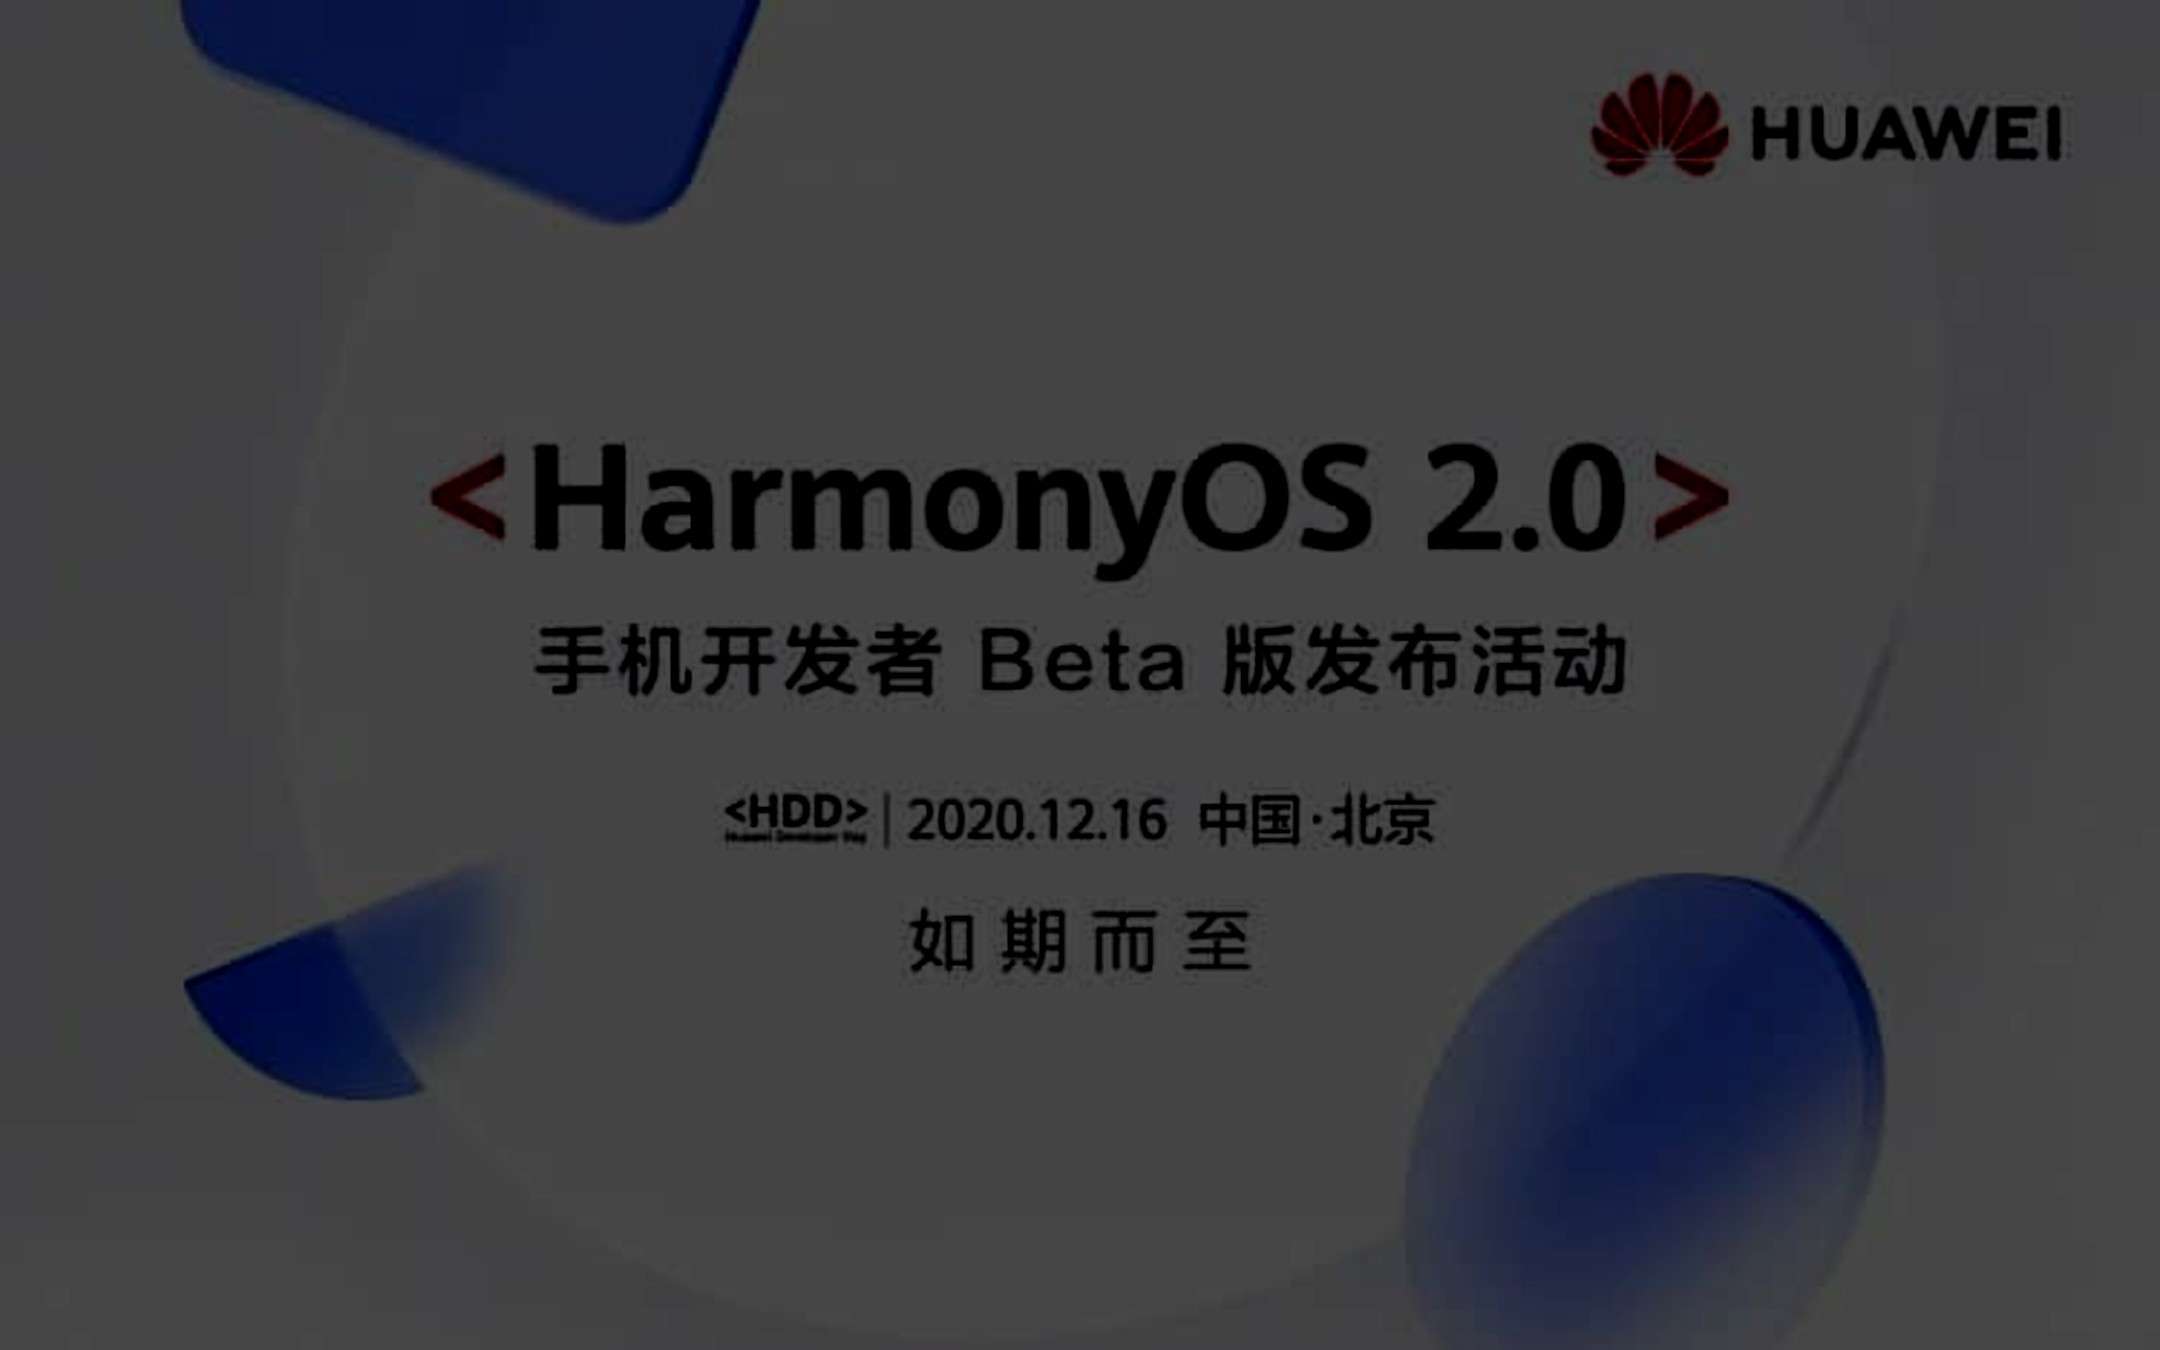 Huawei Harmony OS 2.0 beta: data lancio ufficiale